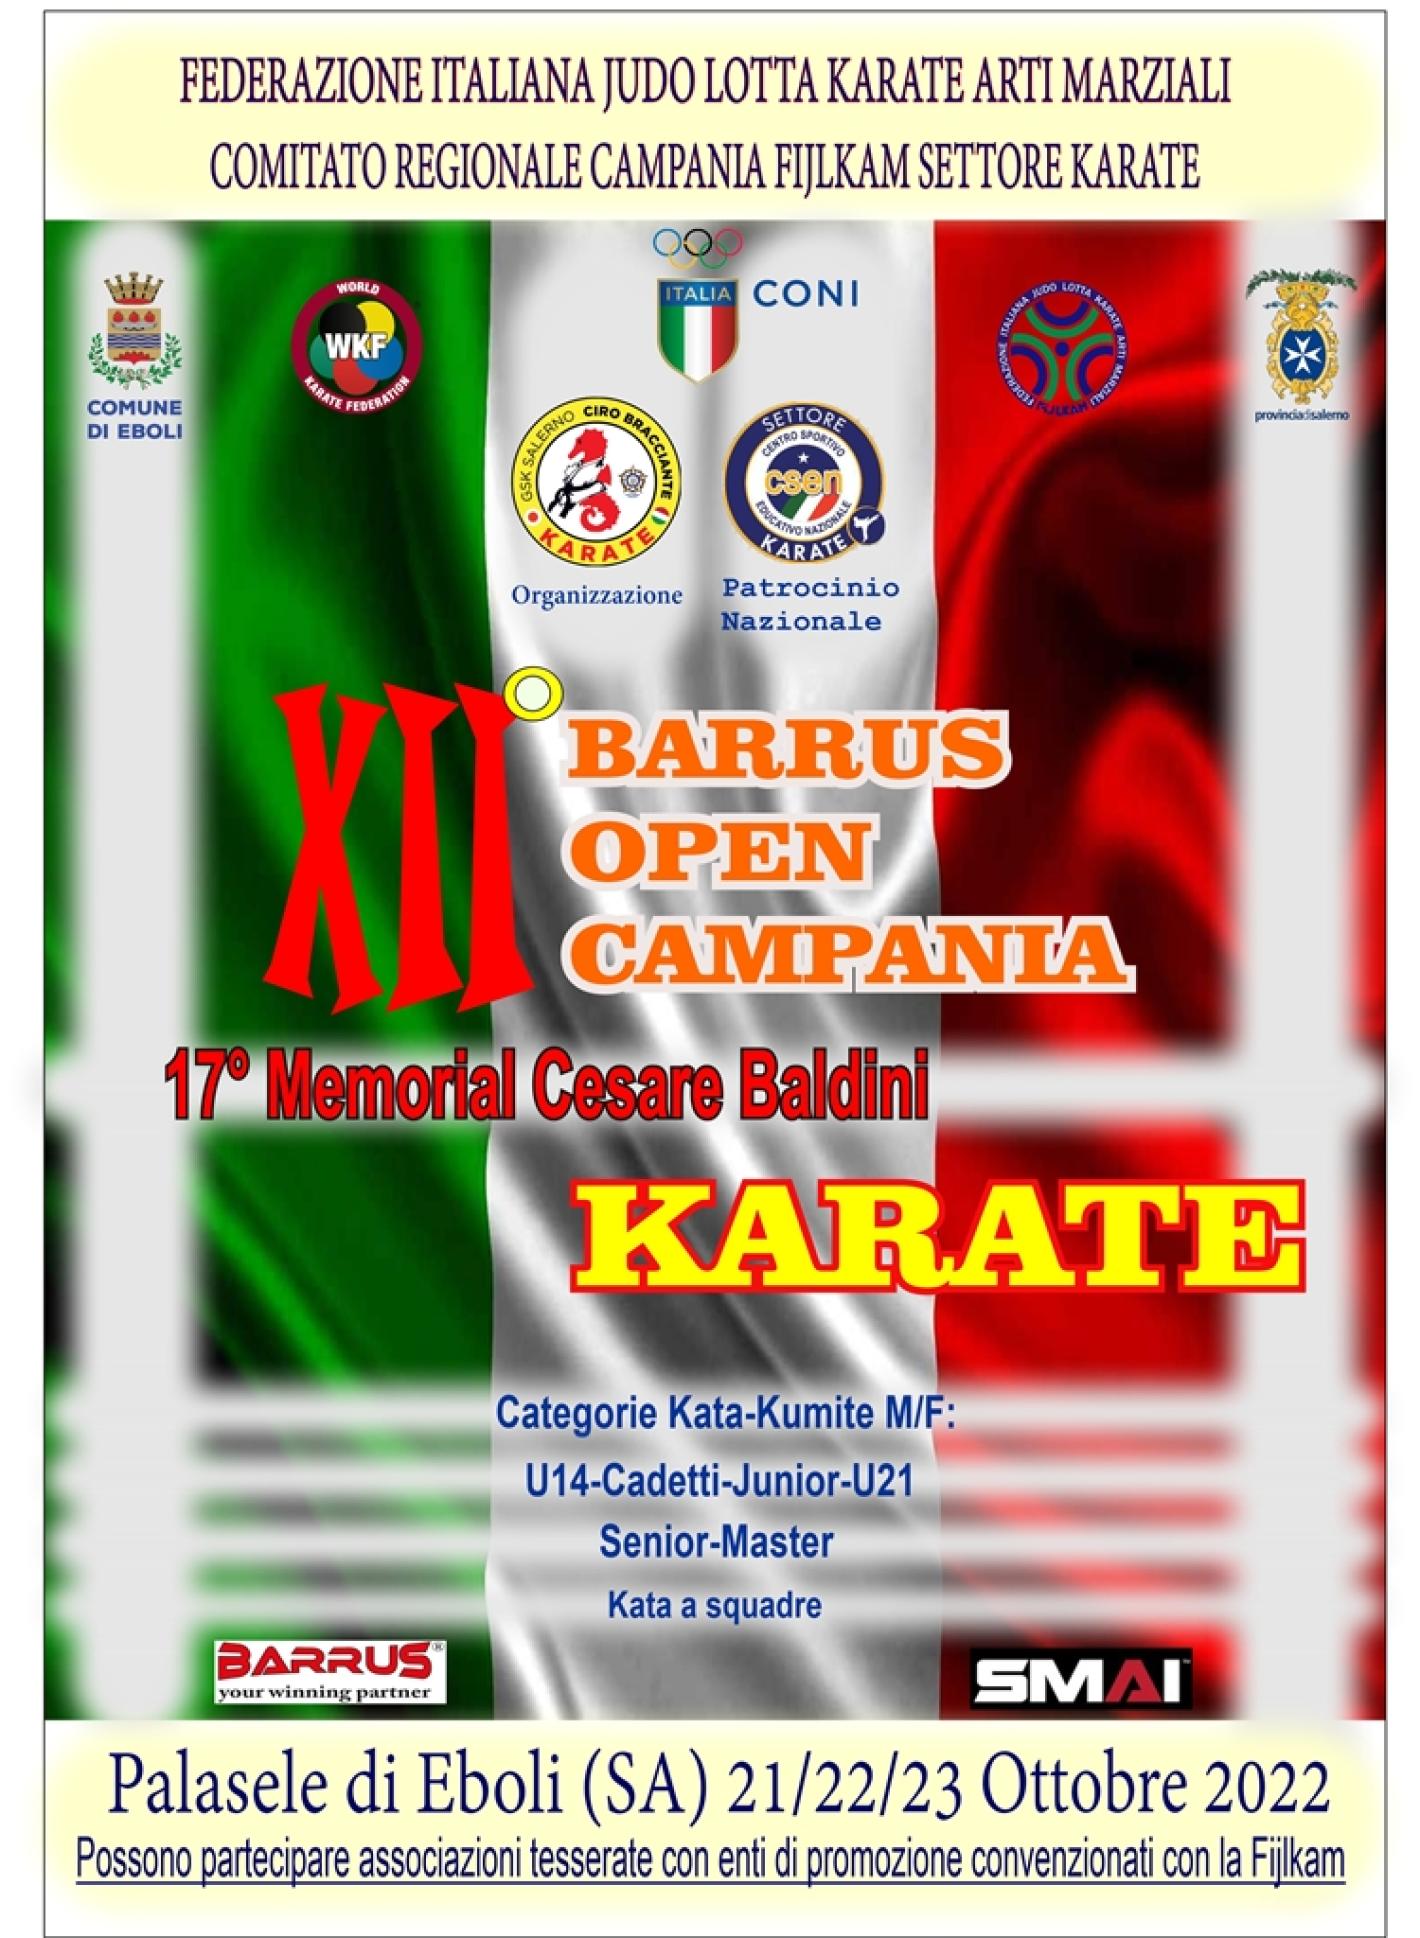 images/campania/campania2022/karate/ottobre/XII_barrus/medium/CIRCOLARE_BARRUS_OPEN_CAMPANIA_Pagina_1.jpg